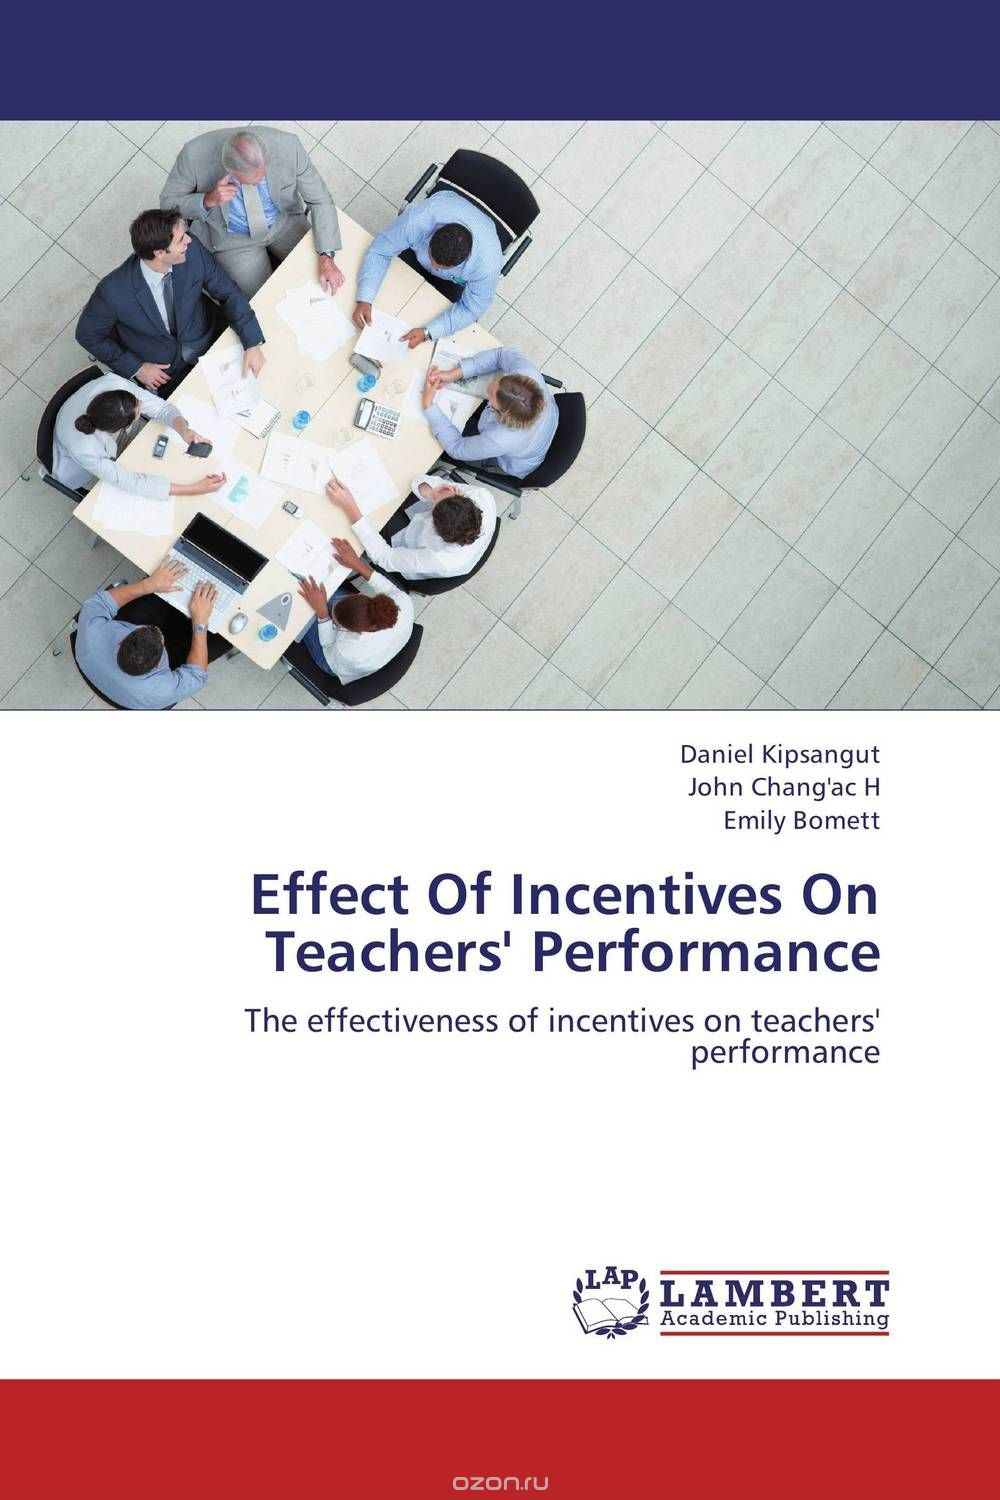 Скачать книгу "Effect Of Incentives On Teachers' Performance"